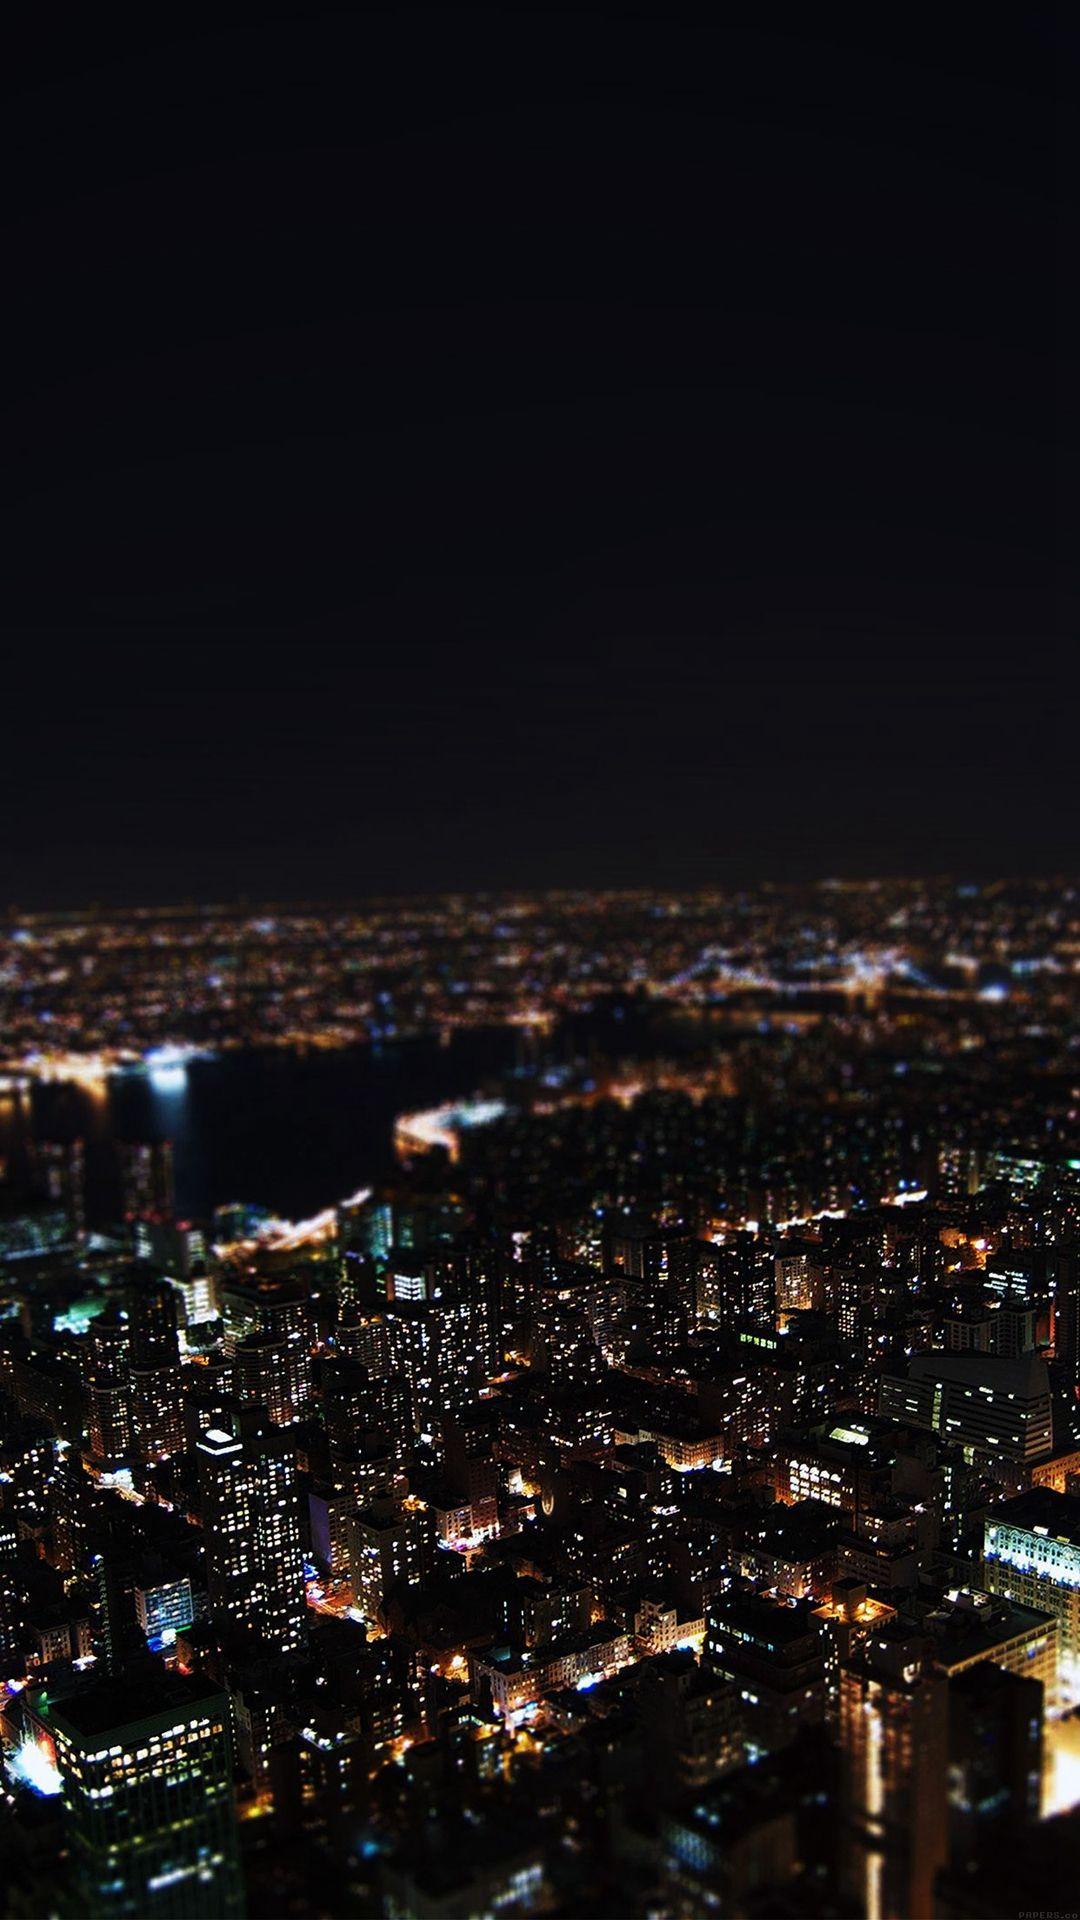 Dark Night City Building Skyview iPhone 6 wallpaper. City wallpaper, Night landscape, Night sky wallpaper